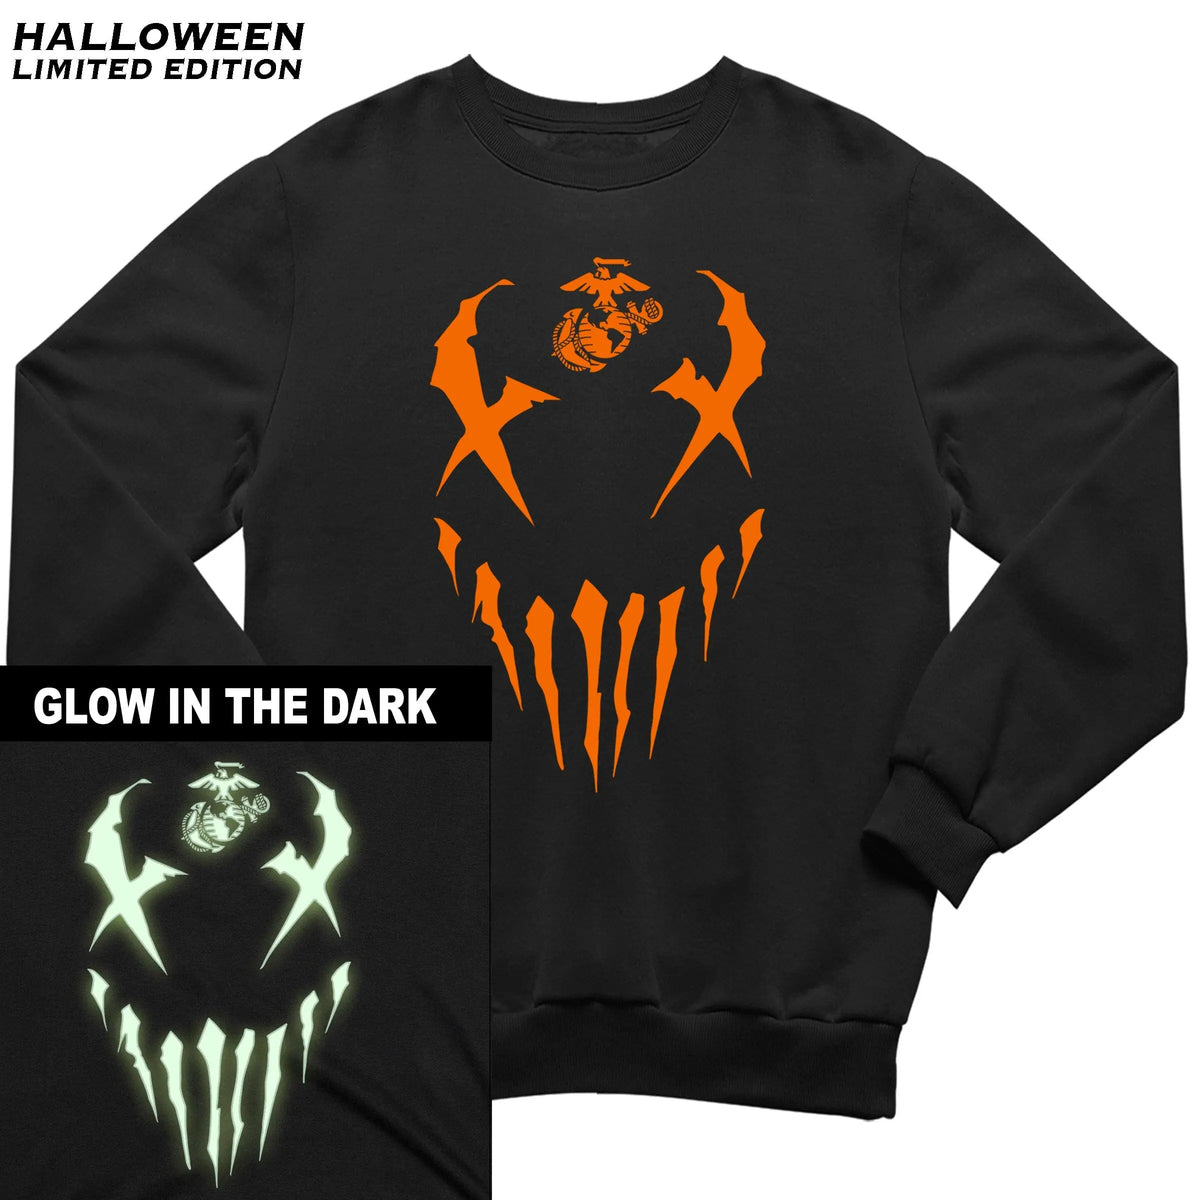 Limited Edition Glow In The Dark Halloween Marines Sweatshirt